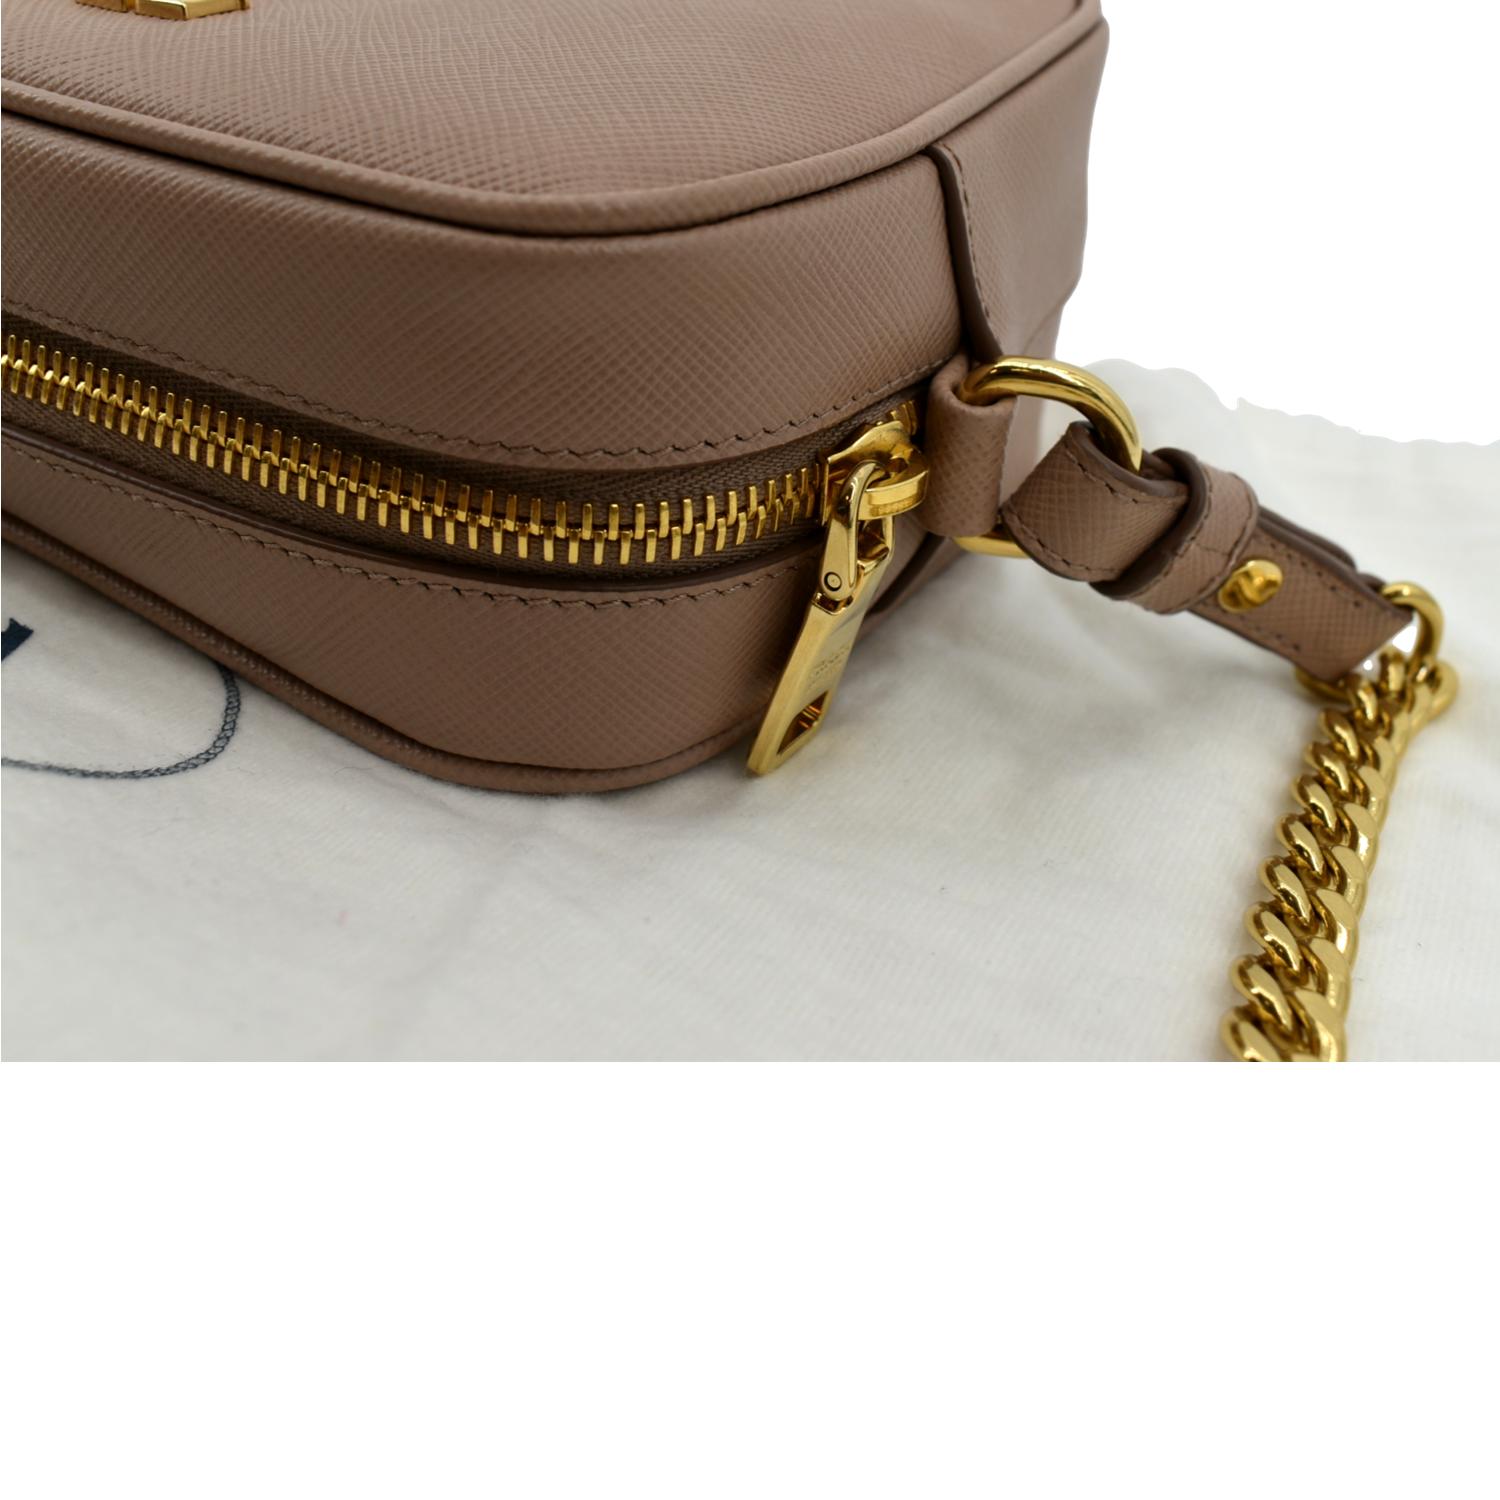 Prada Beige Saffiano Leather Flap Crossbody Bag